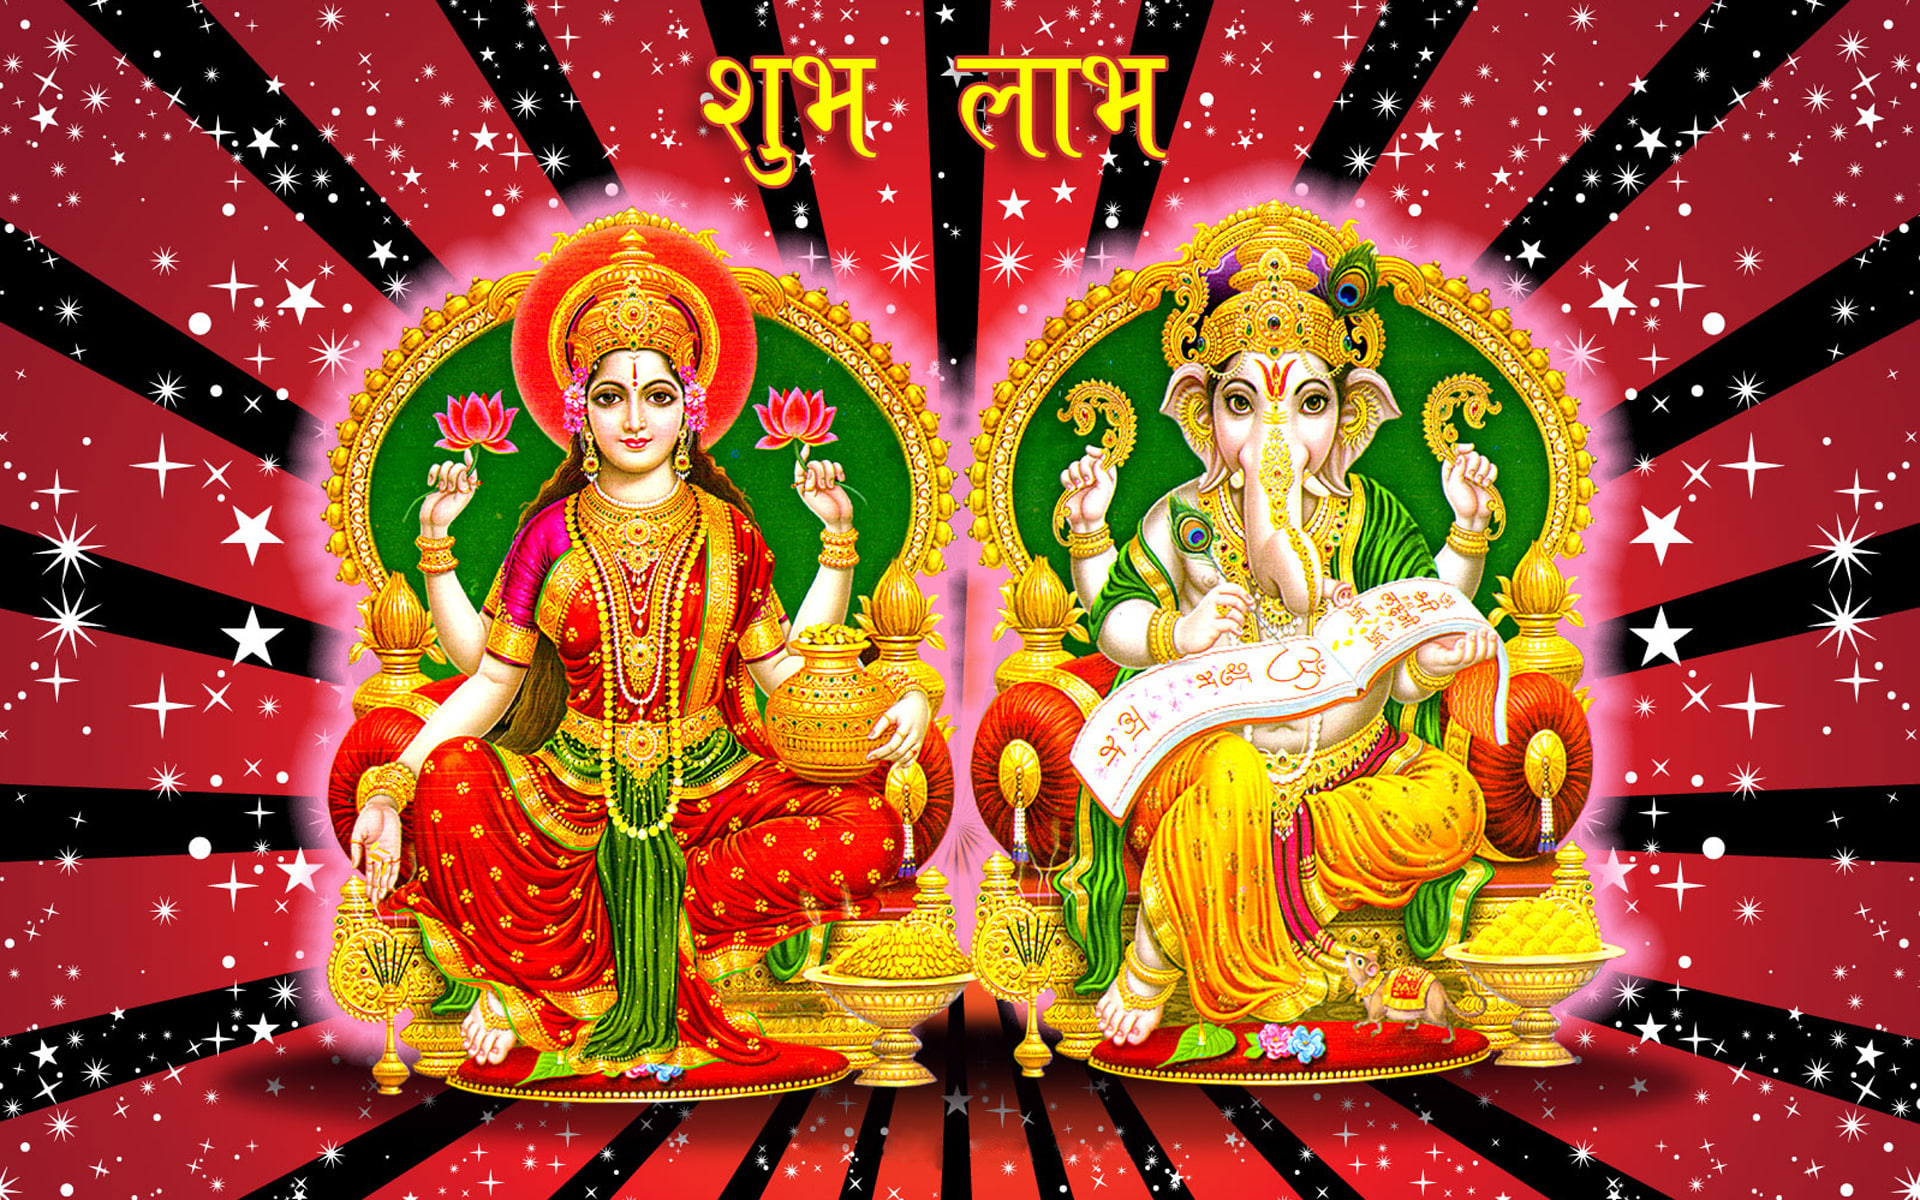 Significance of Ganesh and Lakshmi Pujan in Diwali